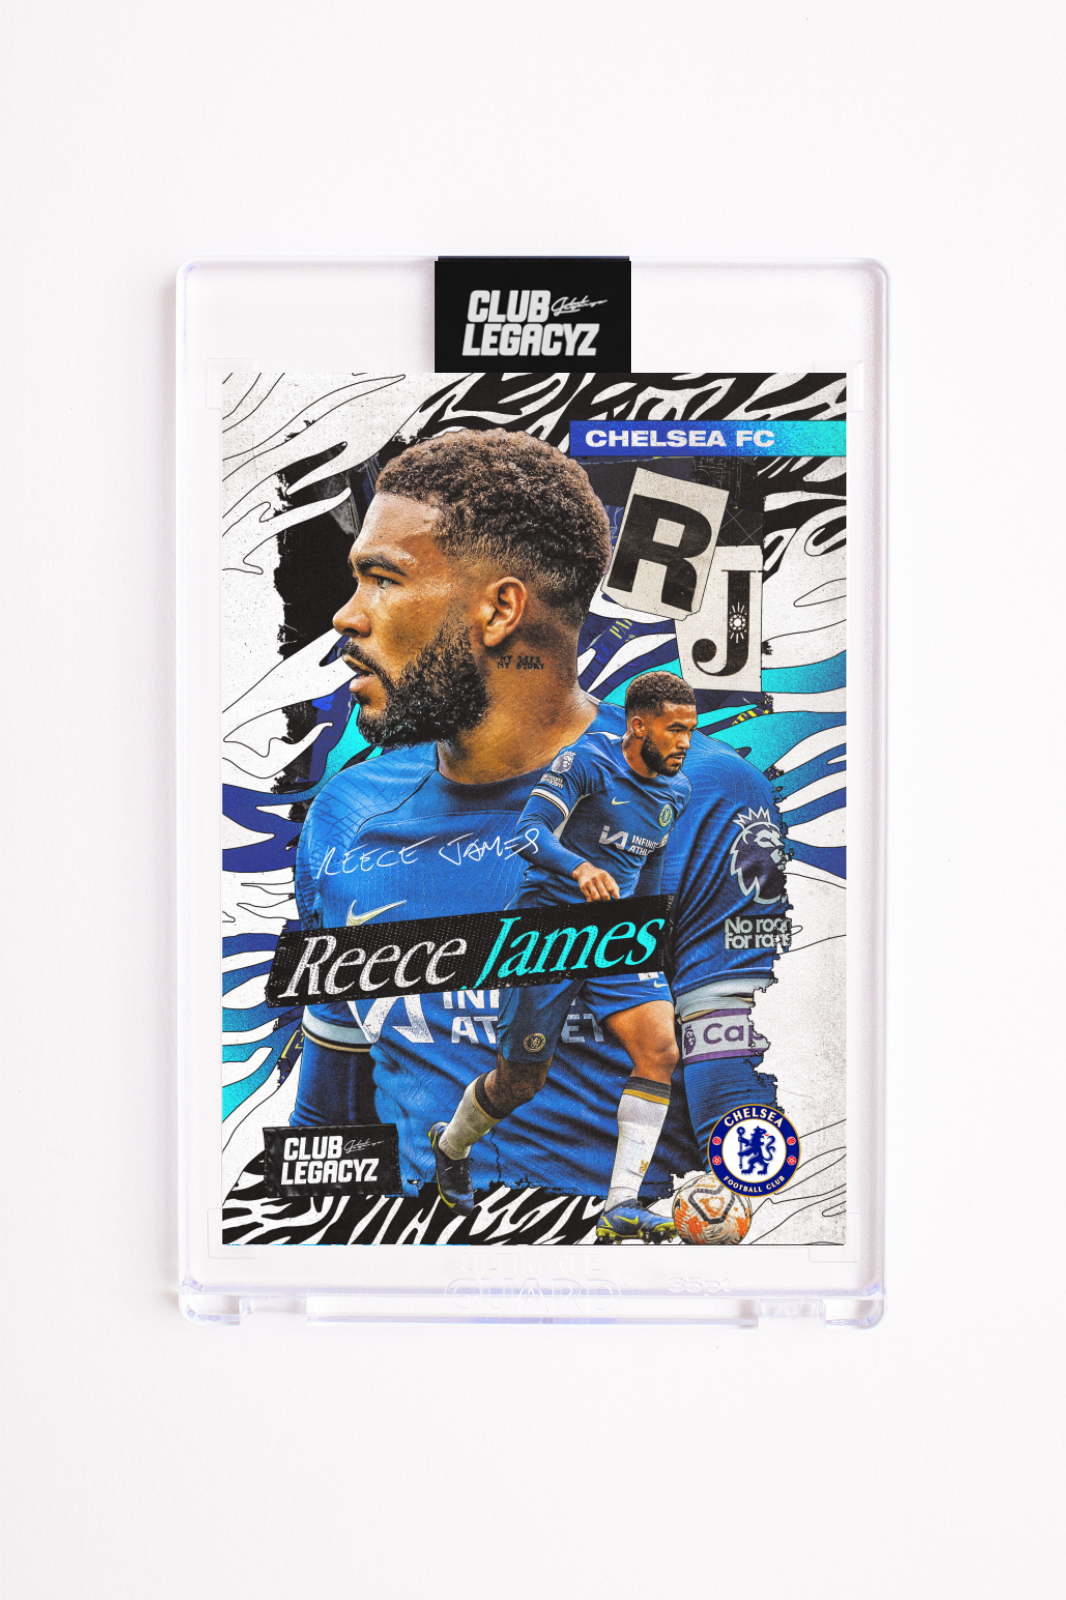 Chelsea FC - Icon Reece James 999 exemplaires